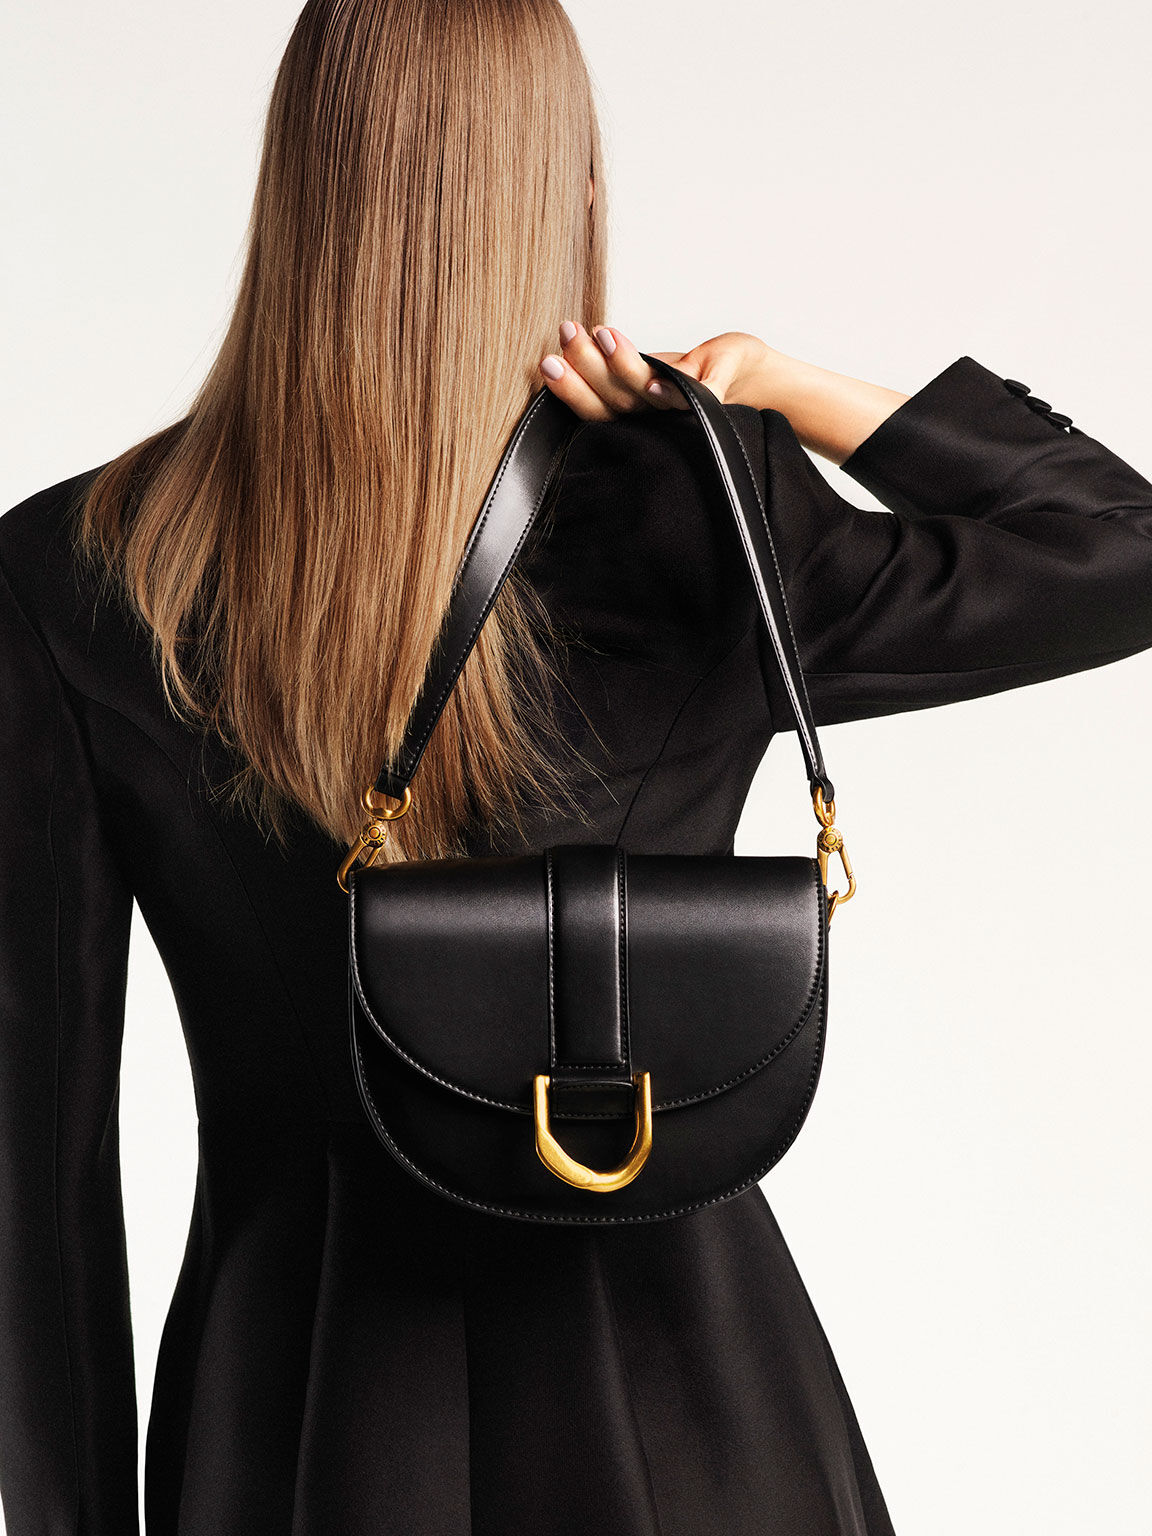 Shop Women’s Bags Online - CHARLES & KEITH DE